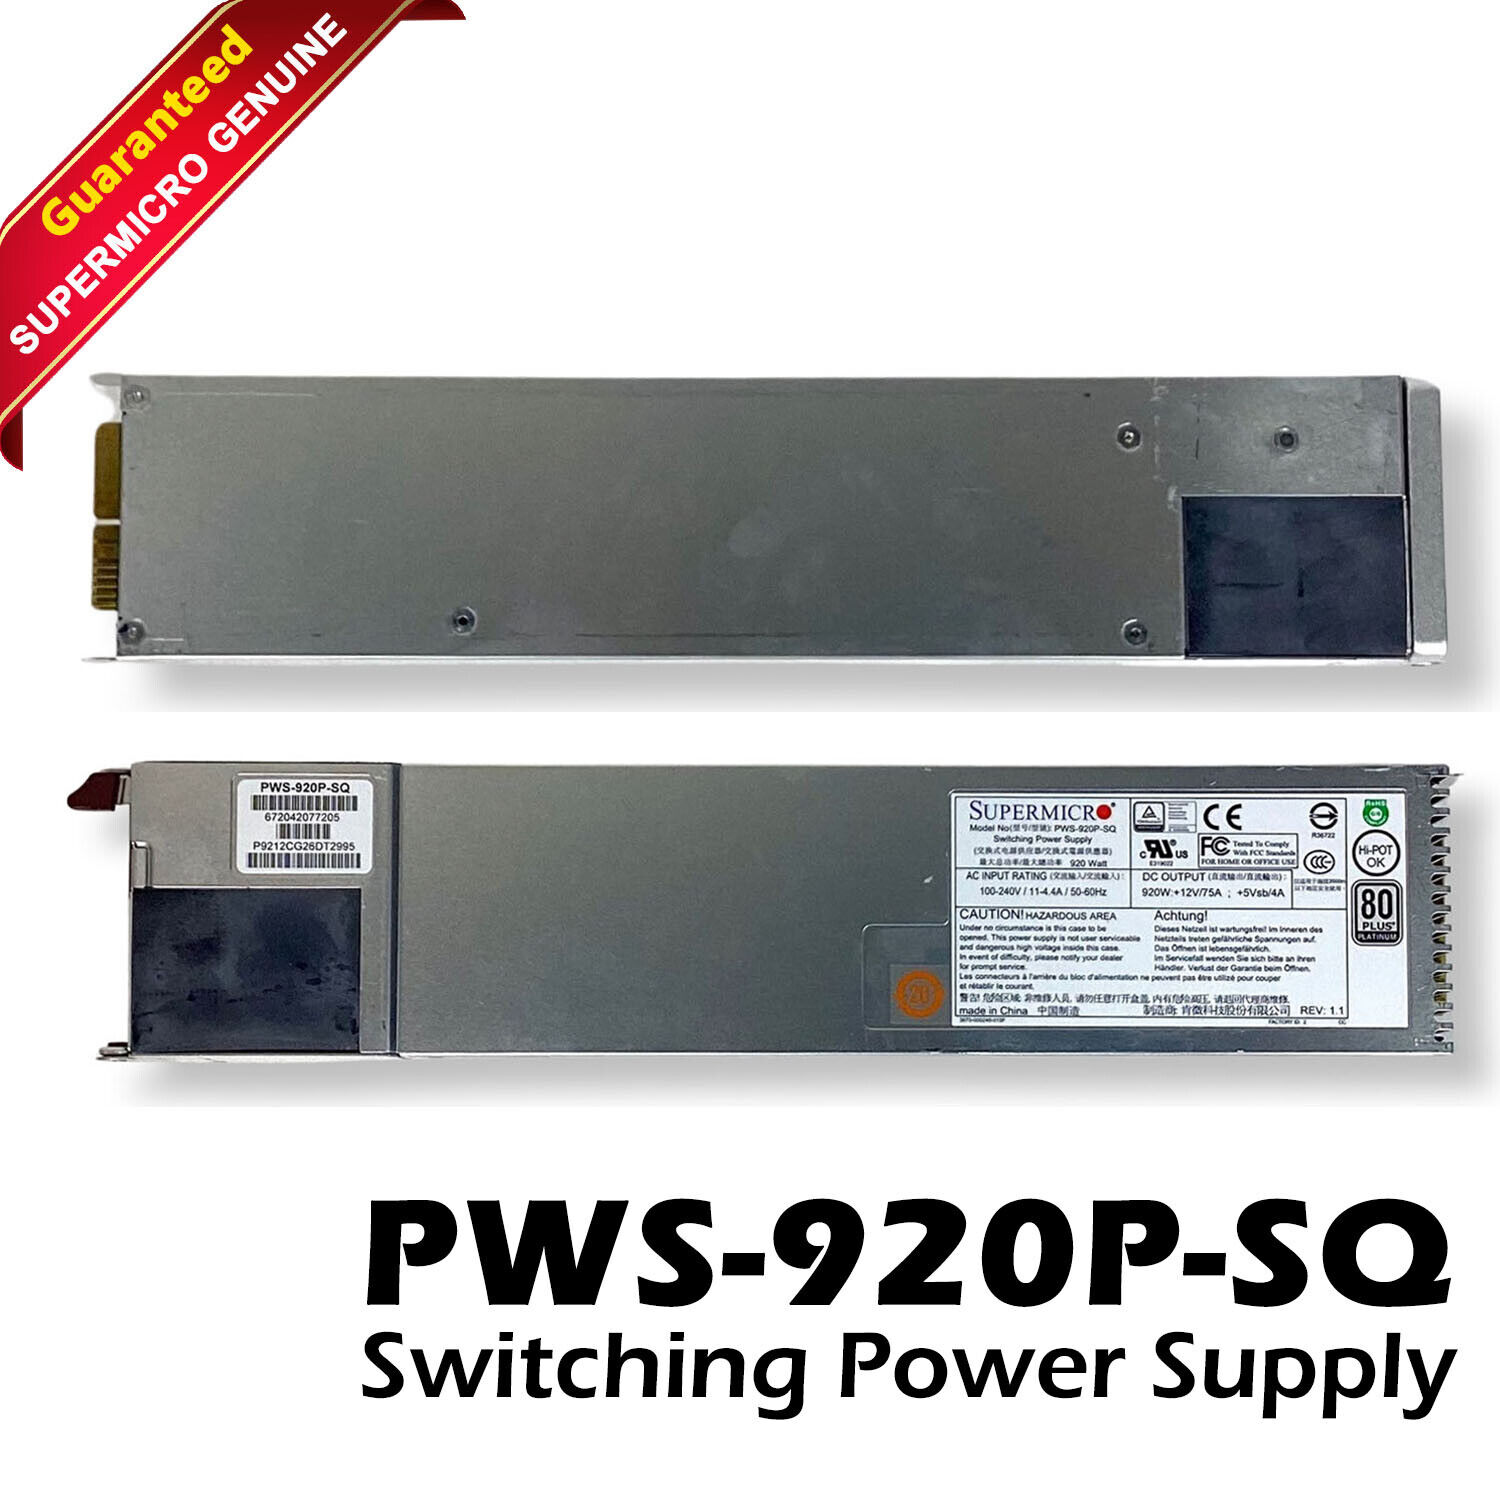 SuperMicro 920W Hot Swap 1U 80+ Platinum Switching Power Supply PWS-920P-SQ